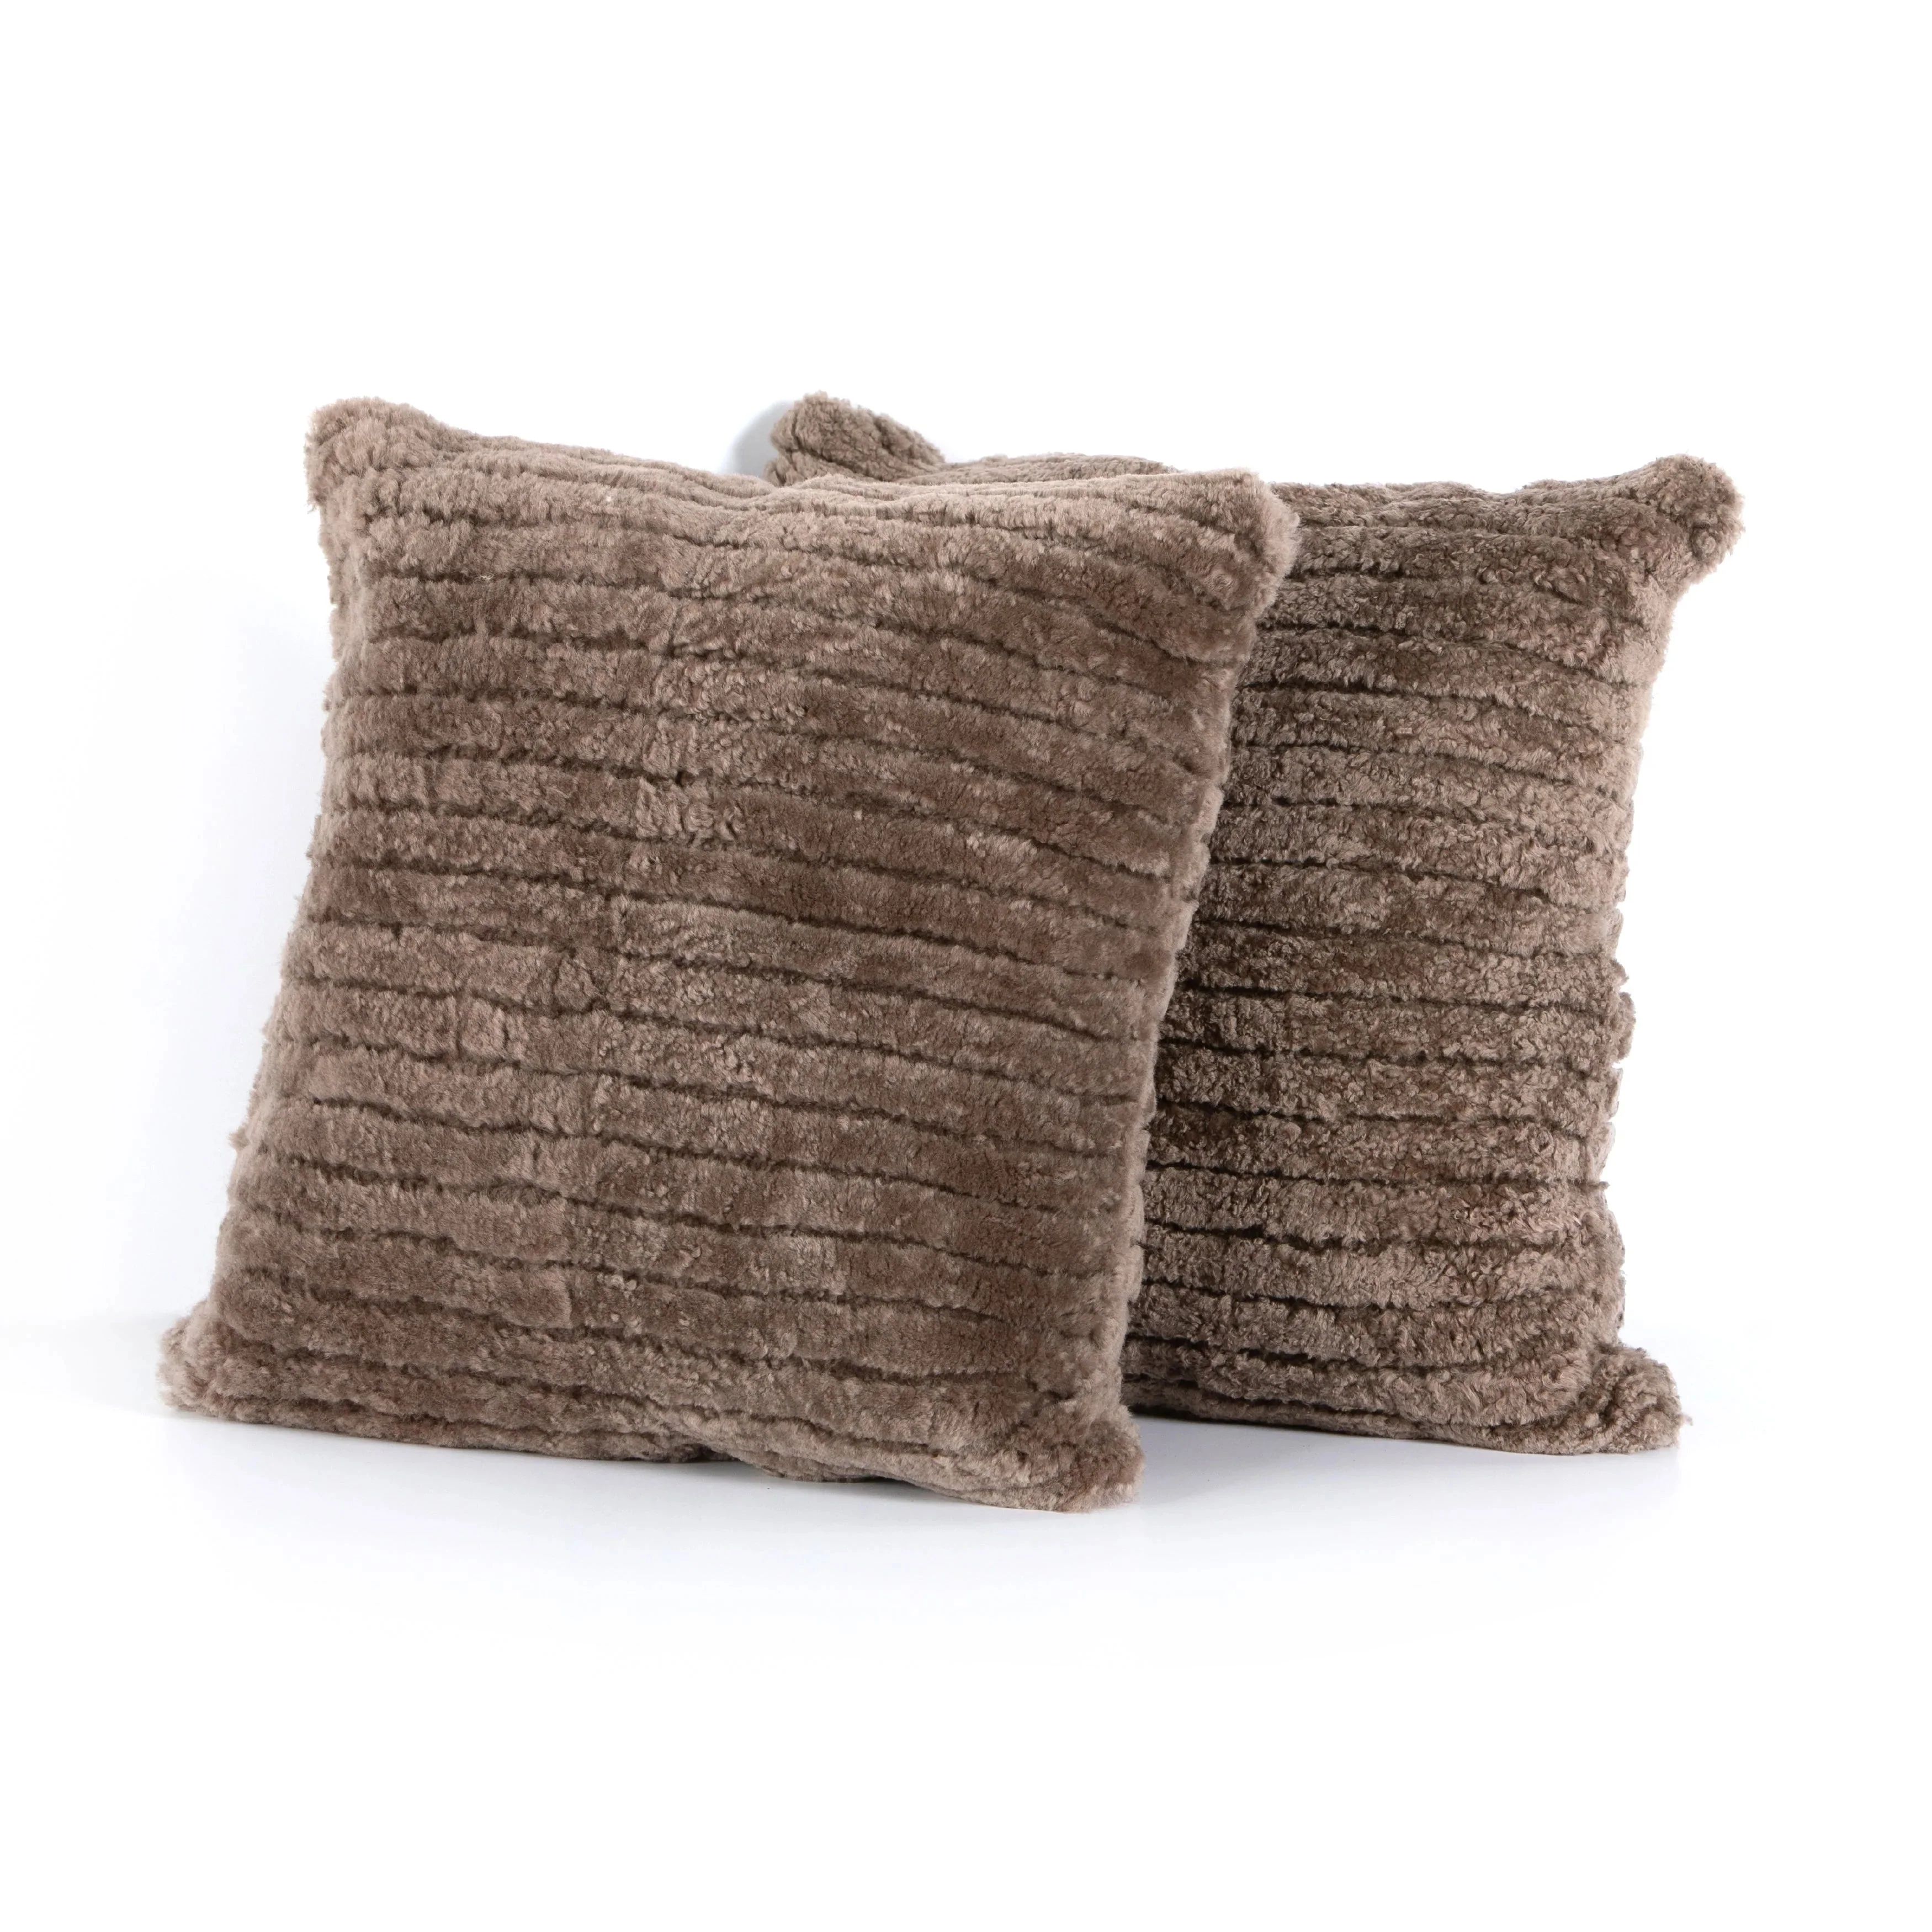 Banded Sheepskin Pillow Brown - Set of 2 | Burke Decor